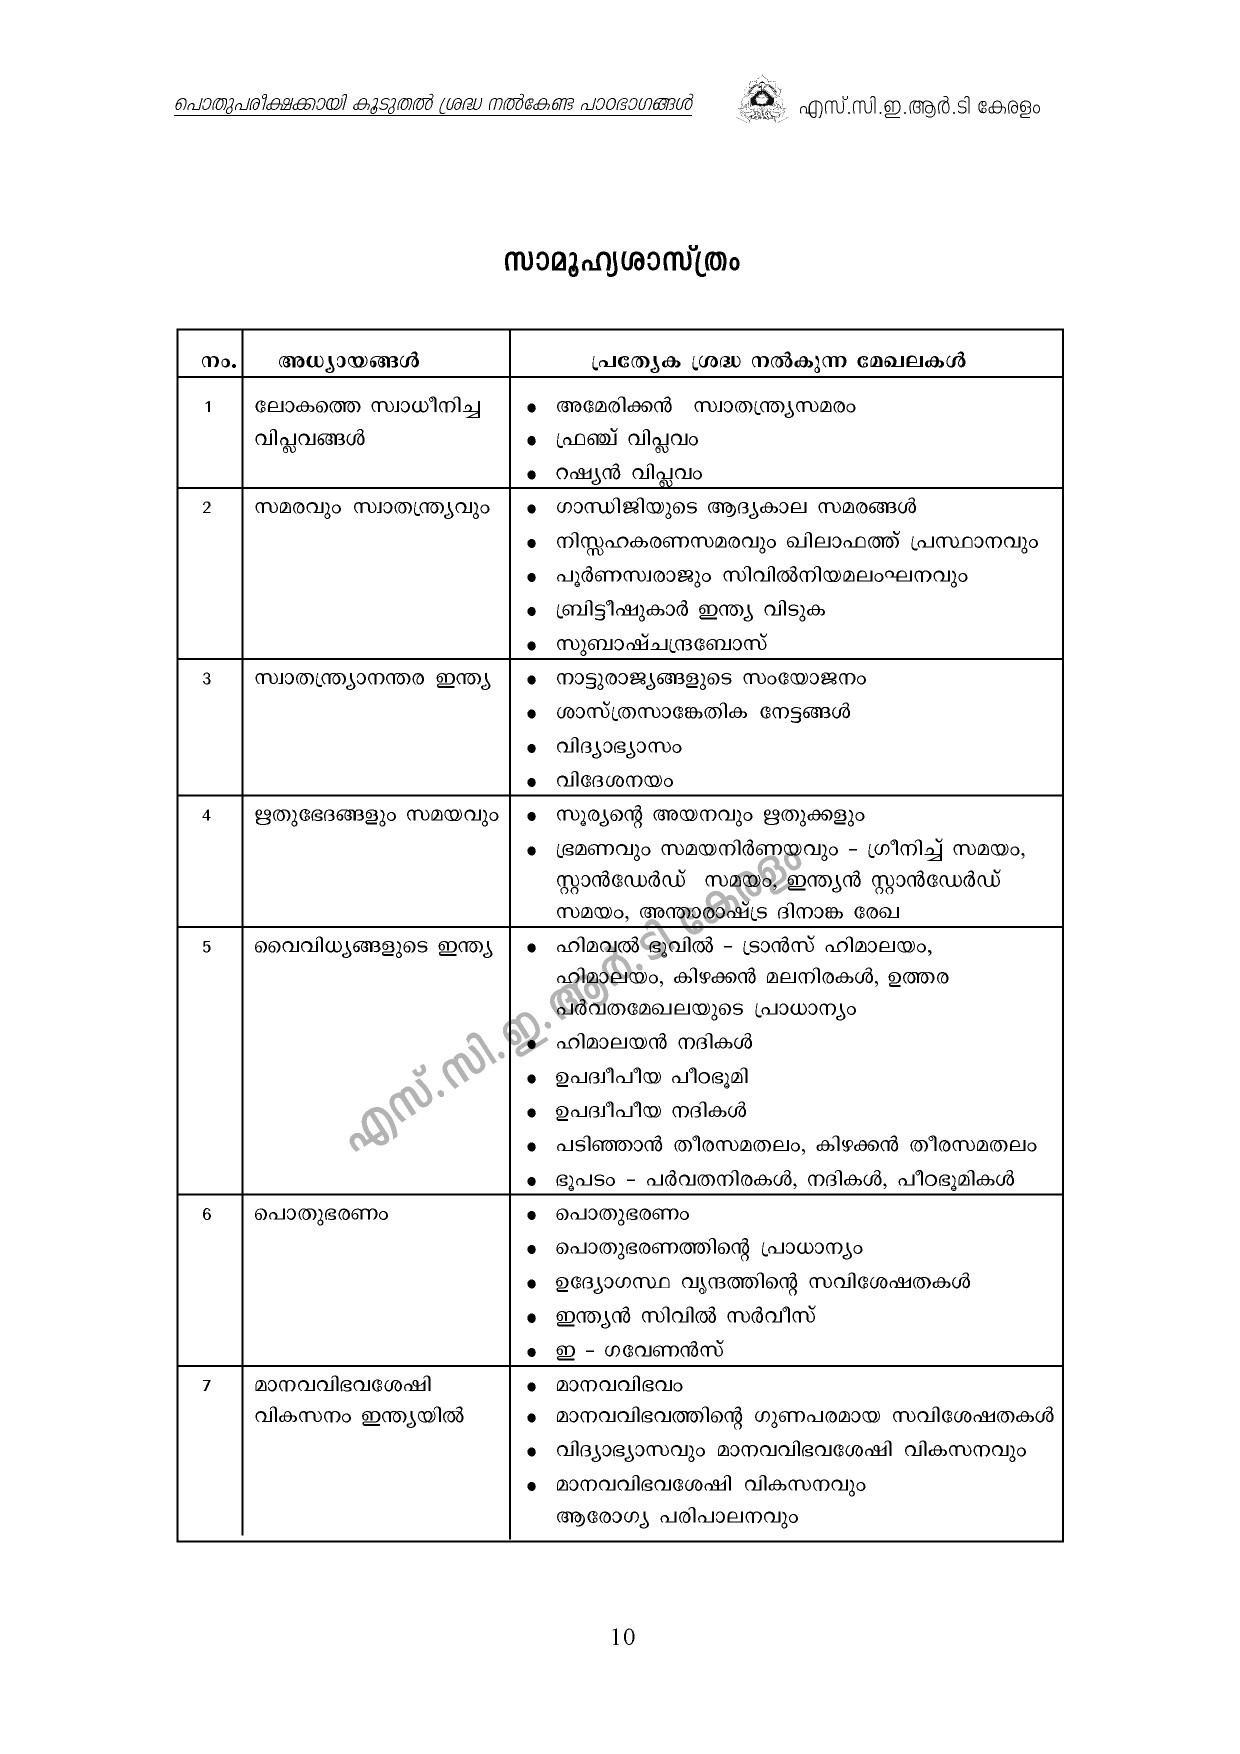 Kerala SSLC 2021 Focus Area - Notification Image 10